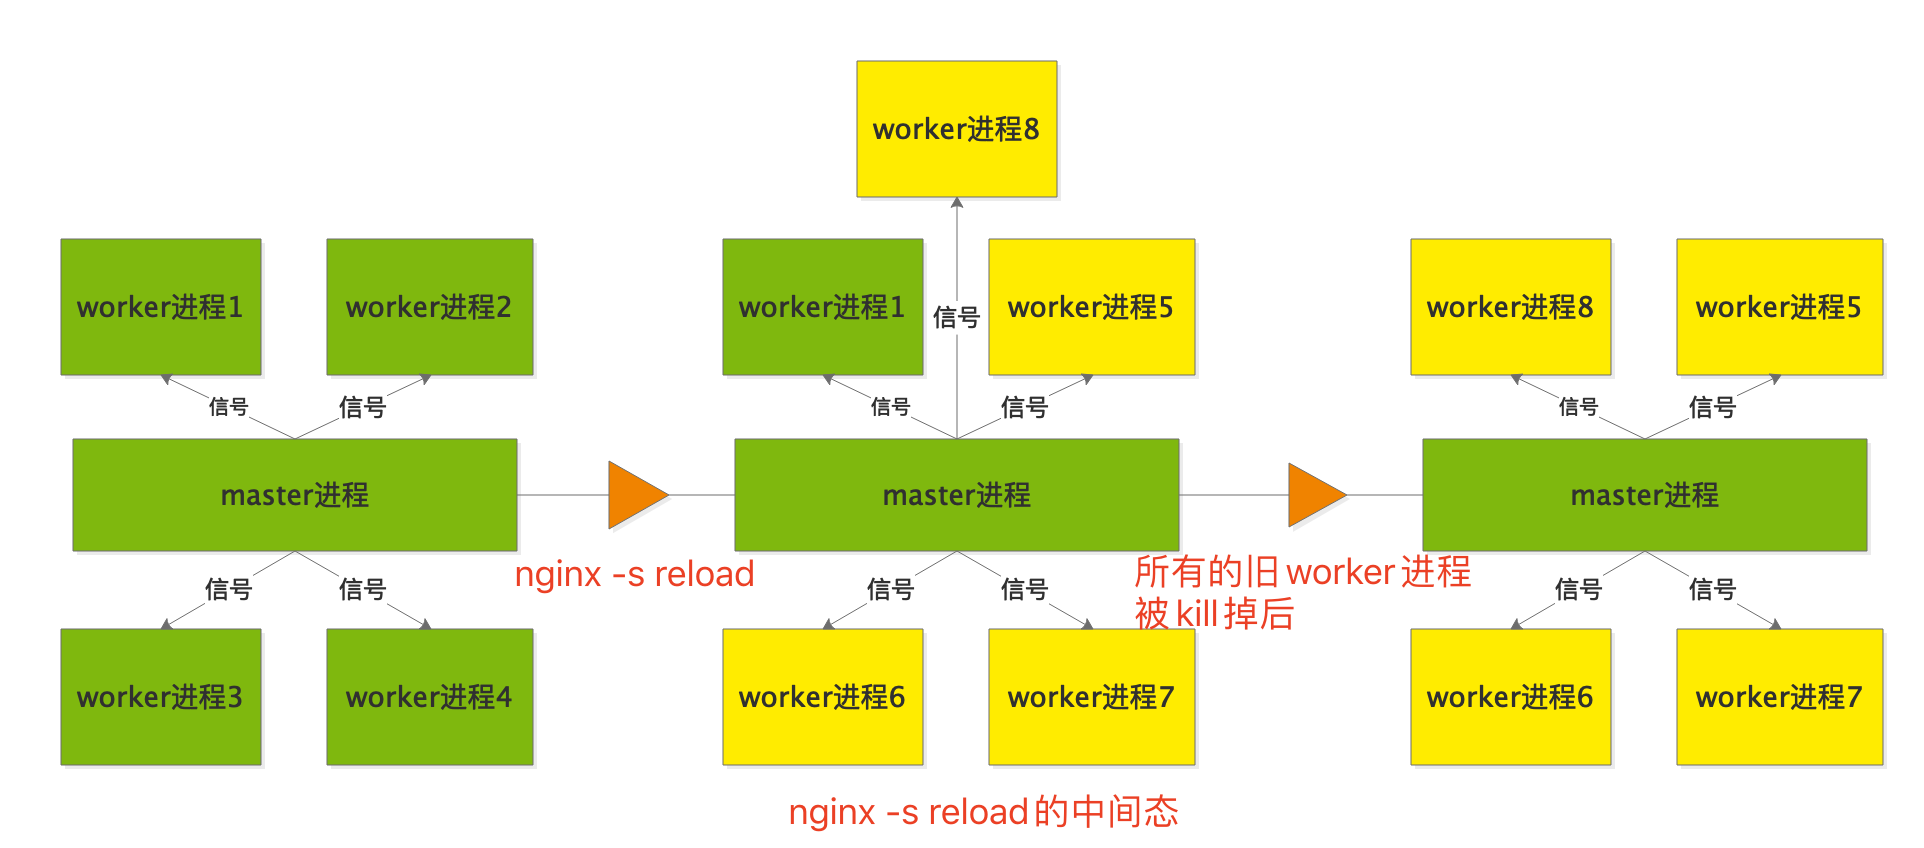 Nginx中进程管理和重载的原理是什么